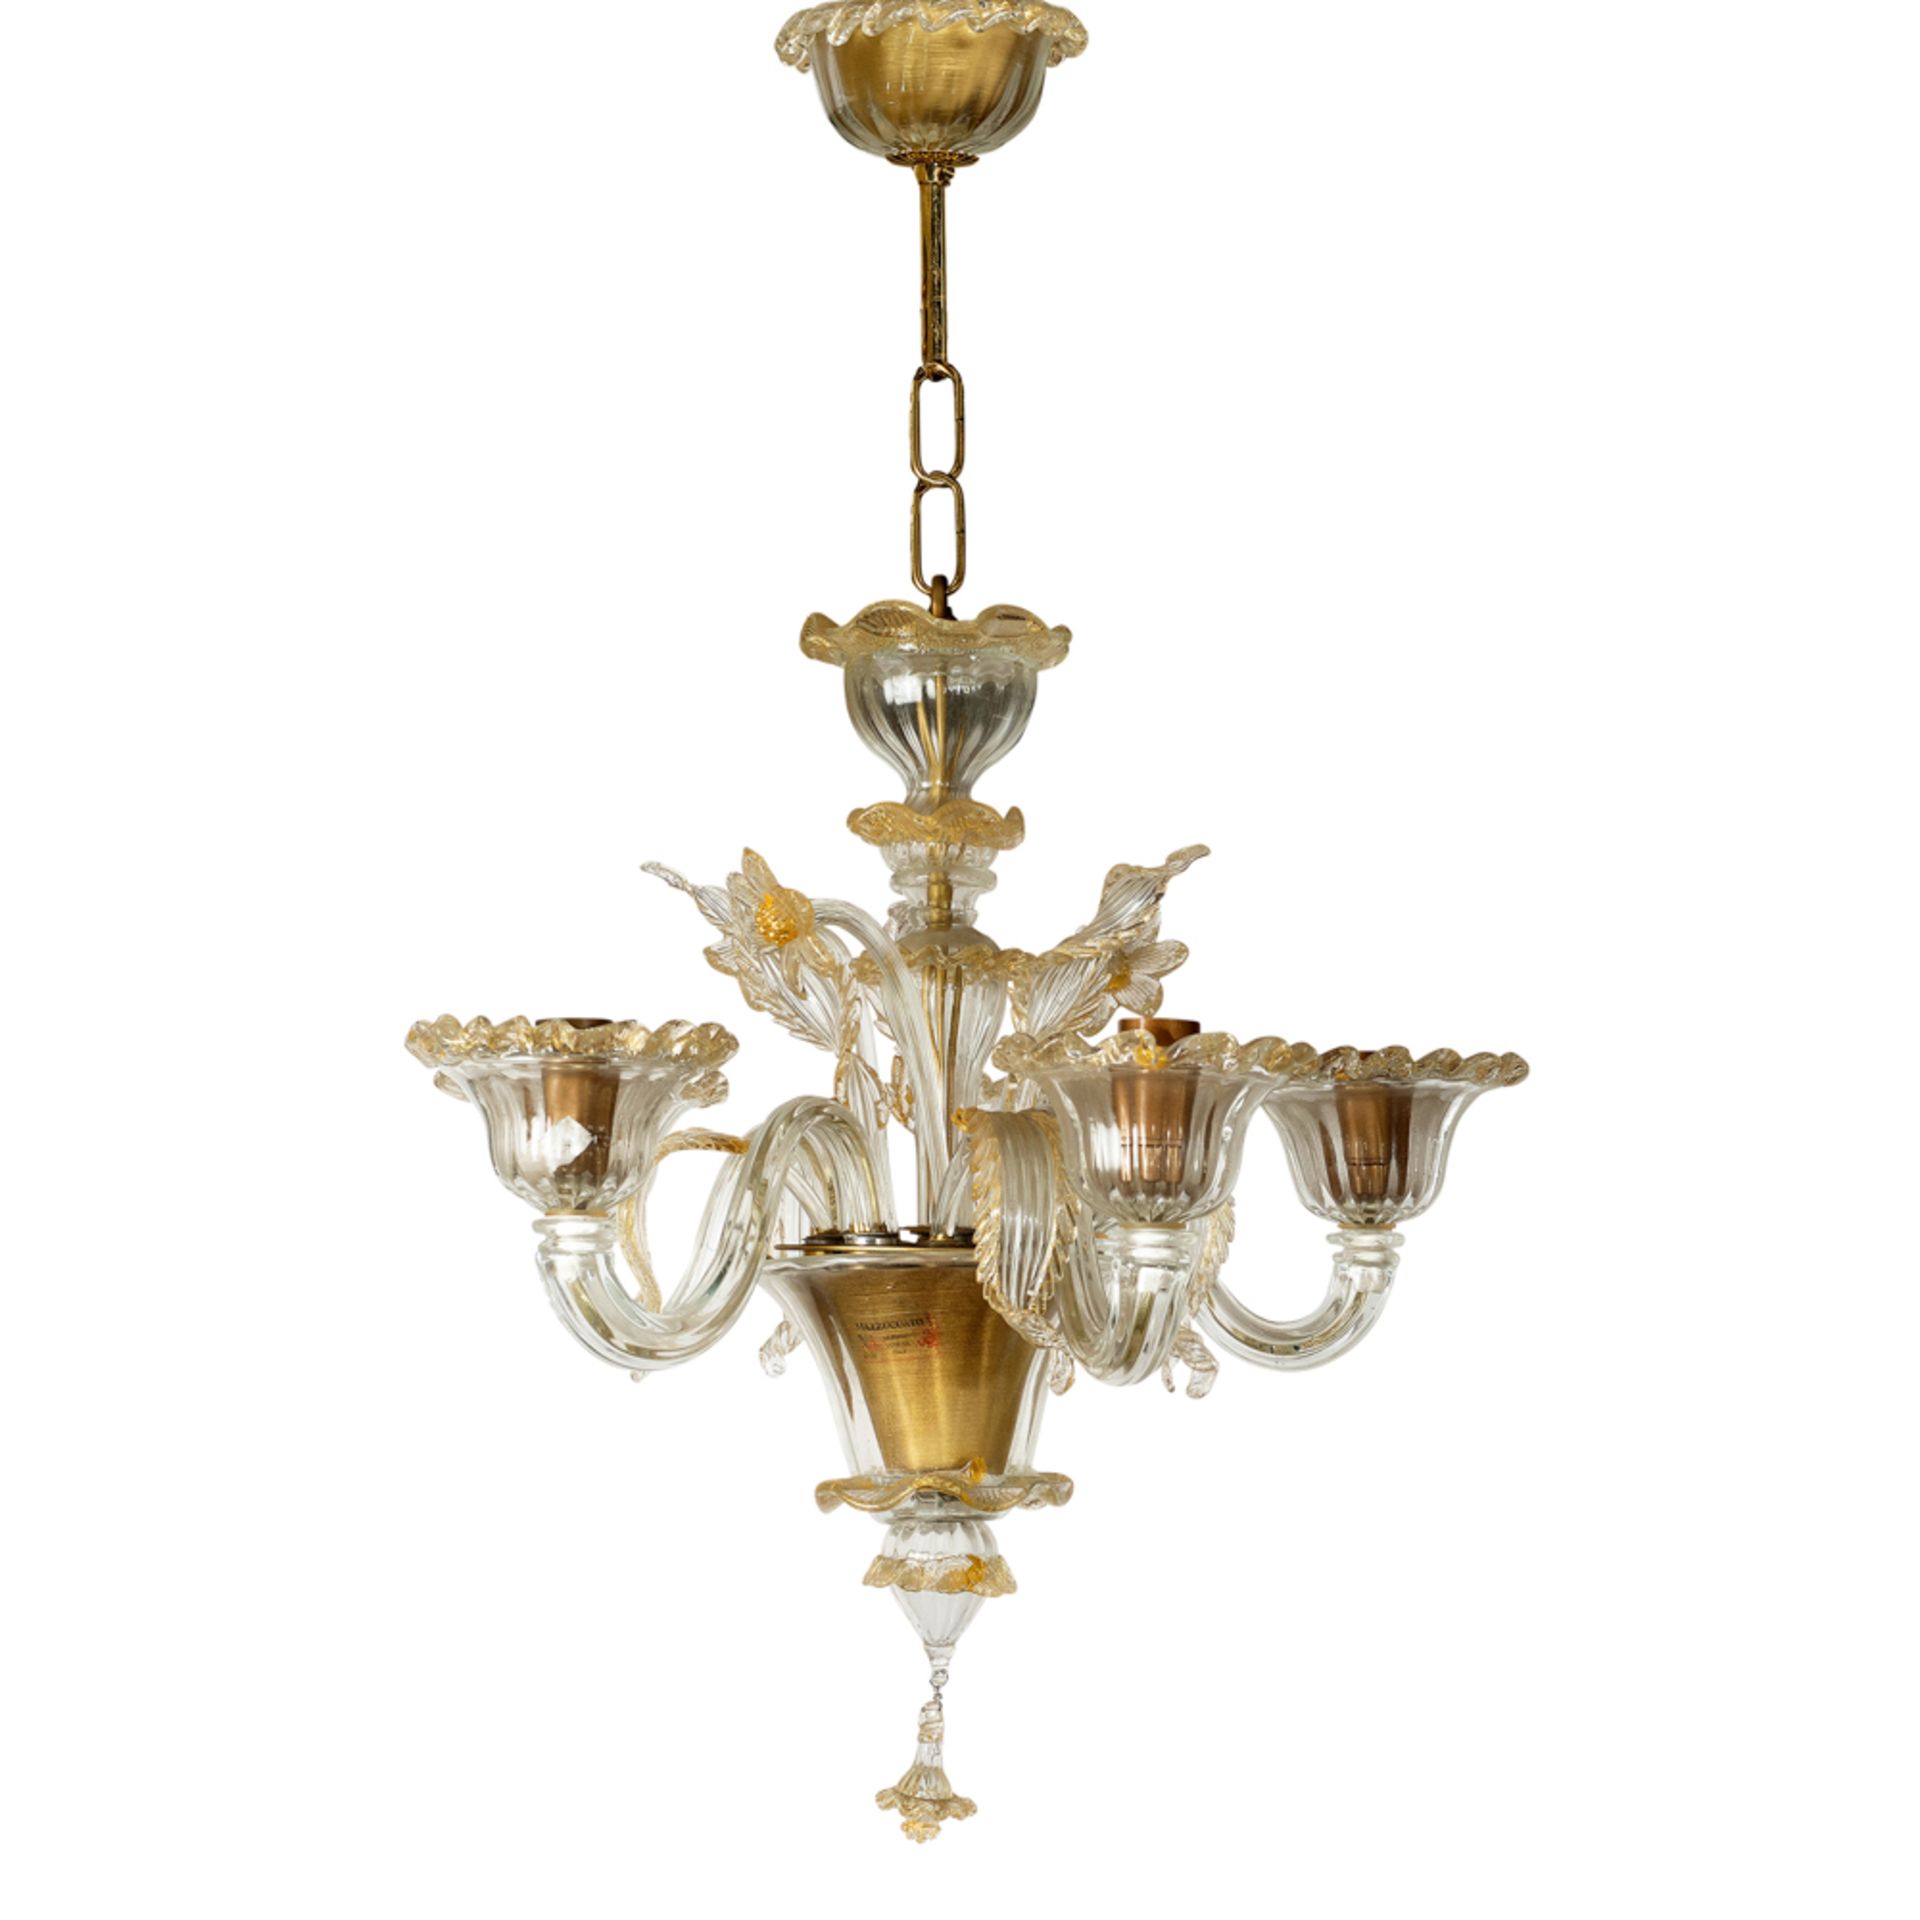 Murano glass chandelier 20th century 45x40 cm.